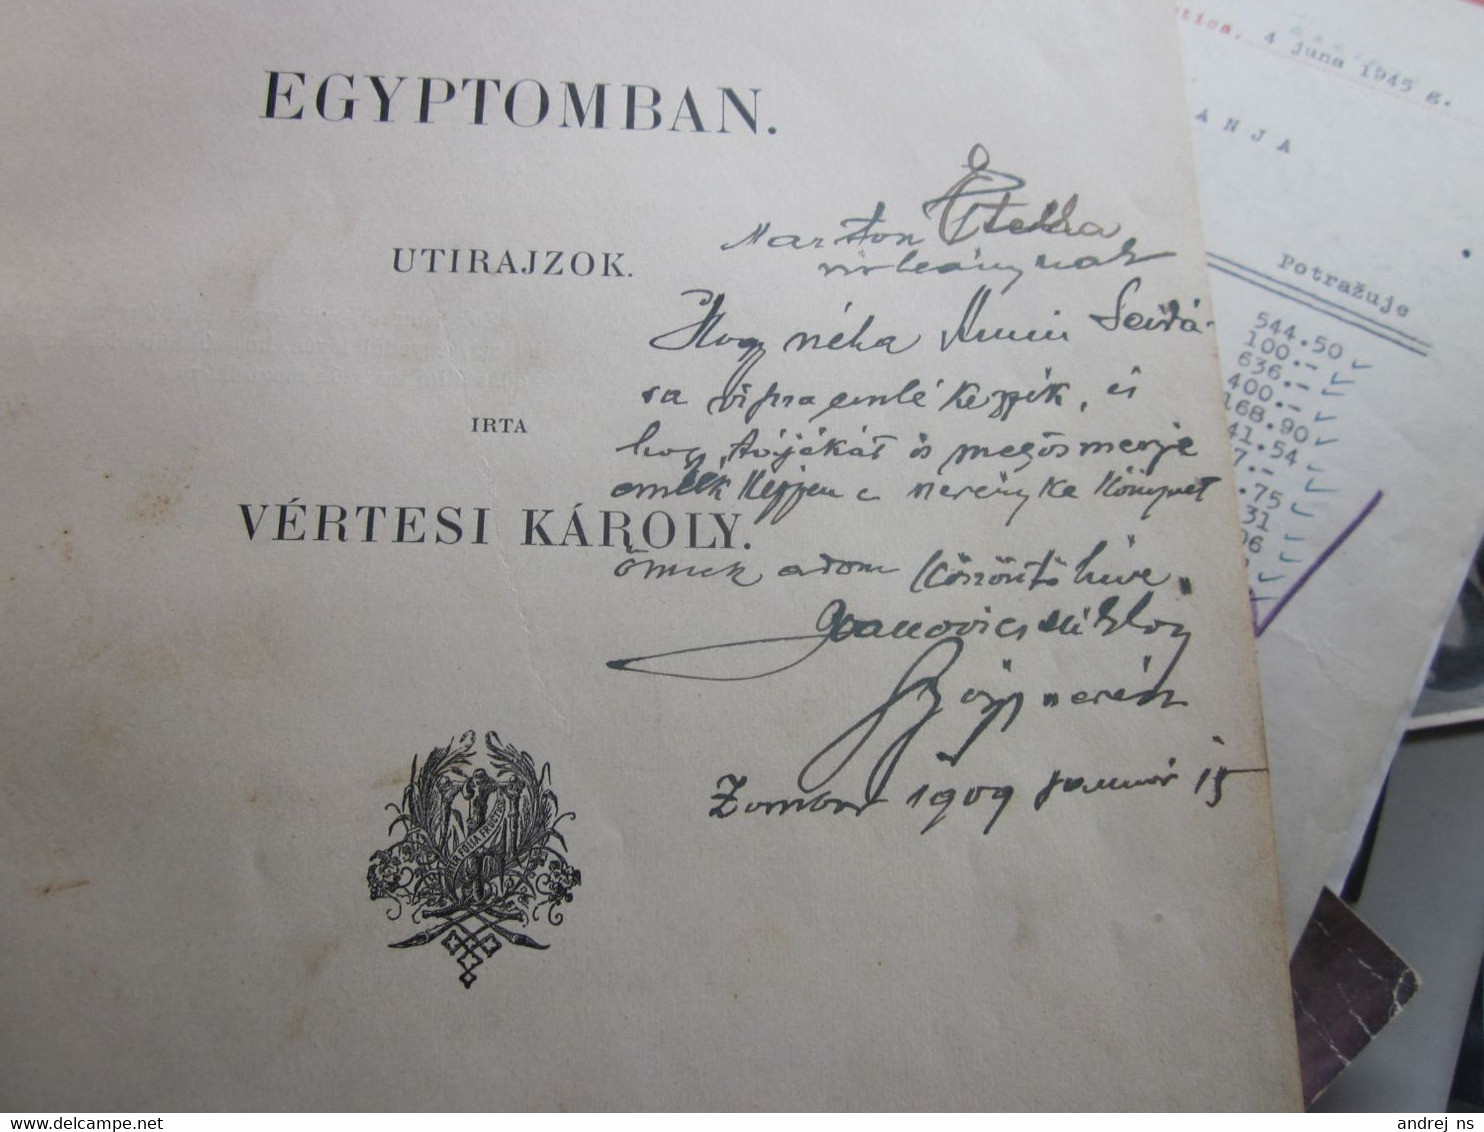 Vertesy Karoly Keleti Eg Alatt Egyiptomban Utirajzok Budapest 1898  204 Pages - Livres Anciens